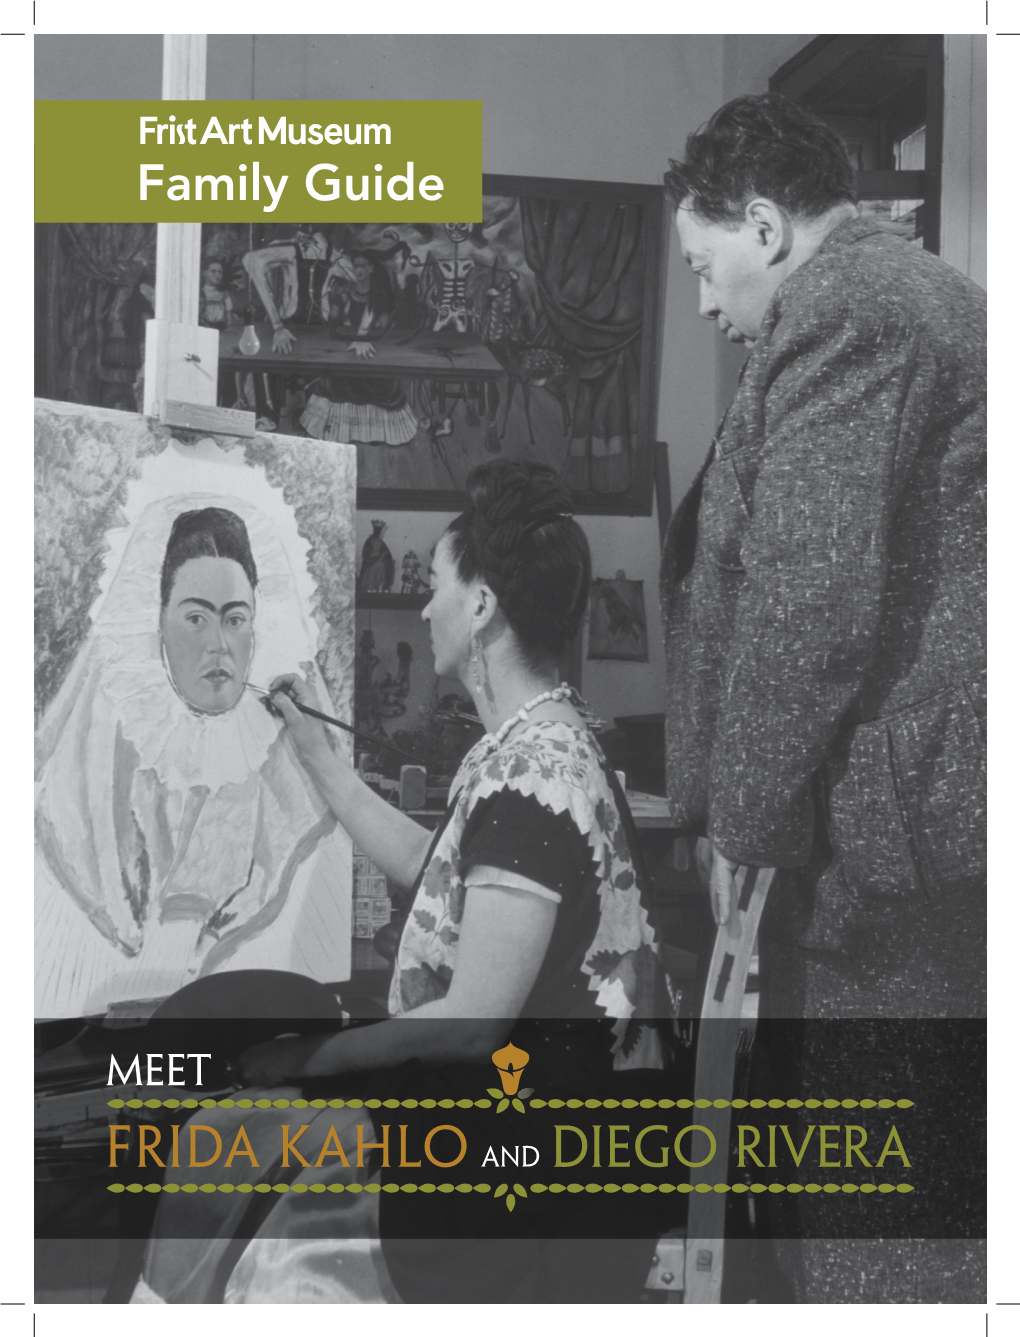 Family Guide (English)—Frida Kahlo, Diego Rivera